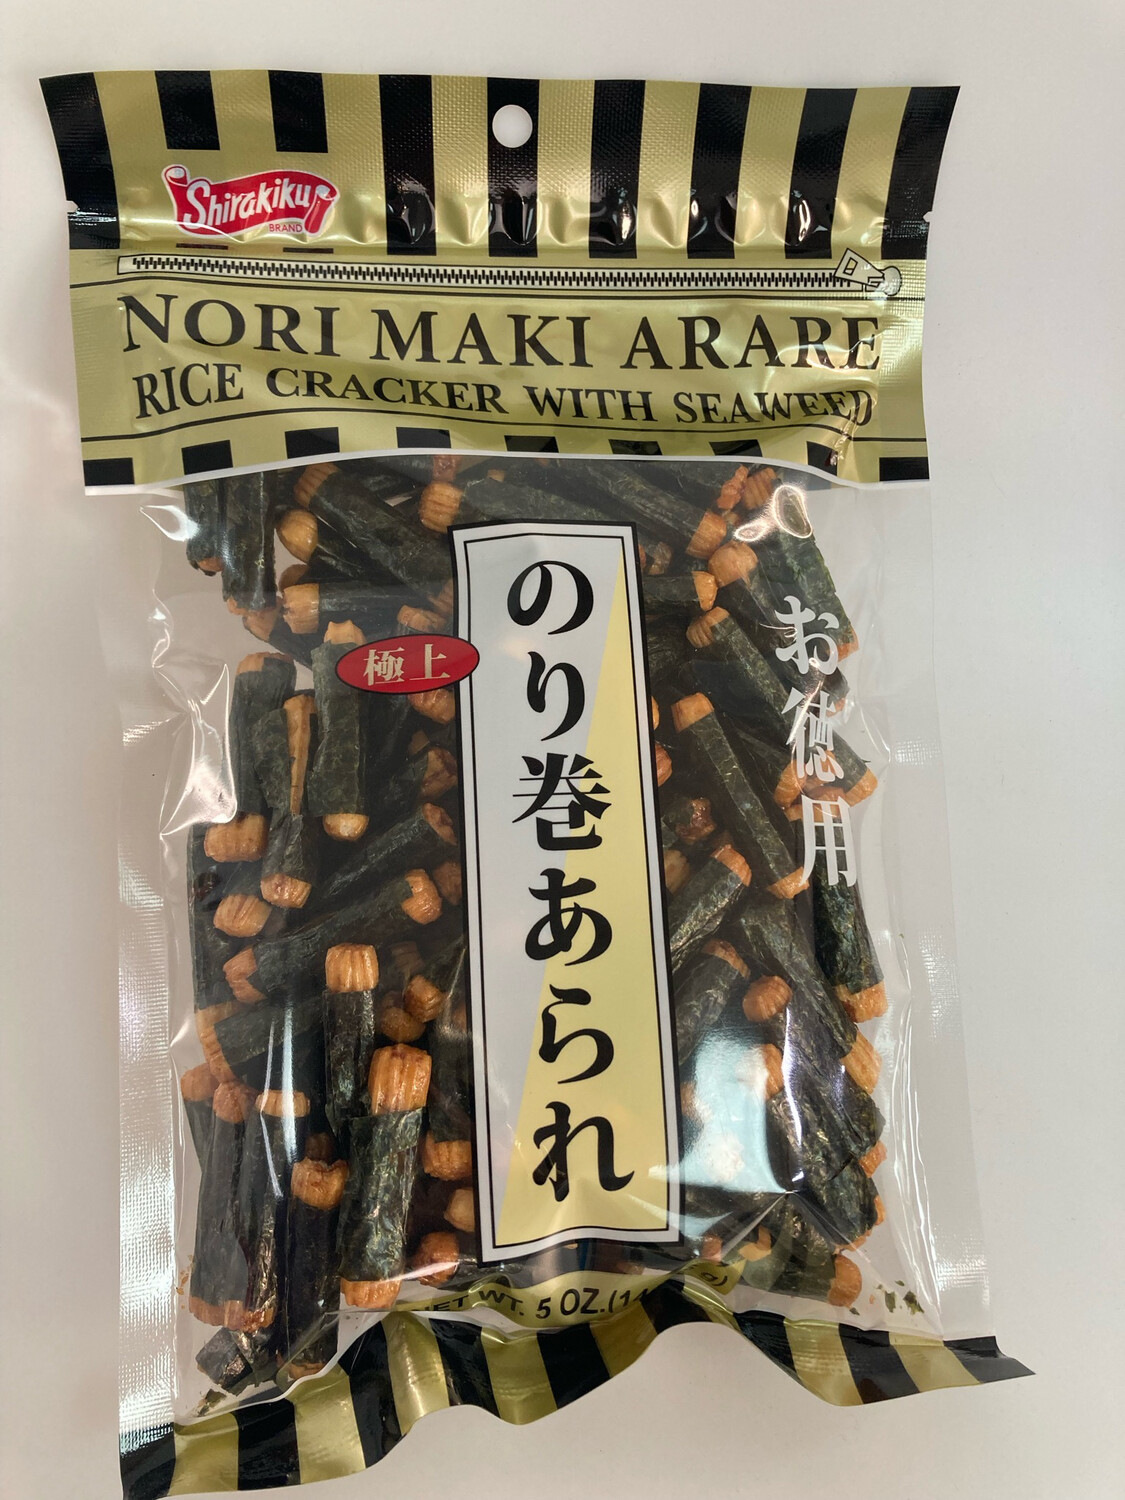 Shirakiku Rice Cracker with seaweed赞岐屋 海苔卷米饼 5oz